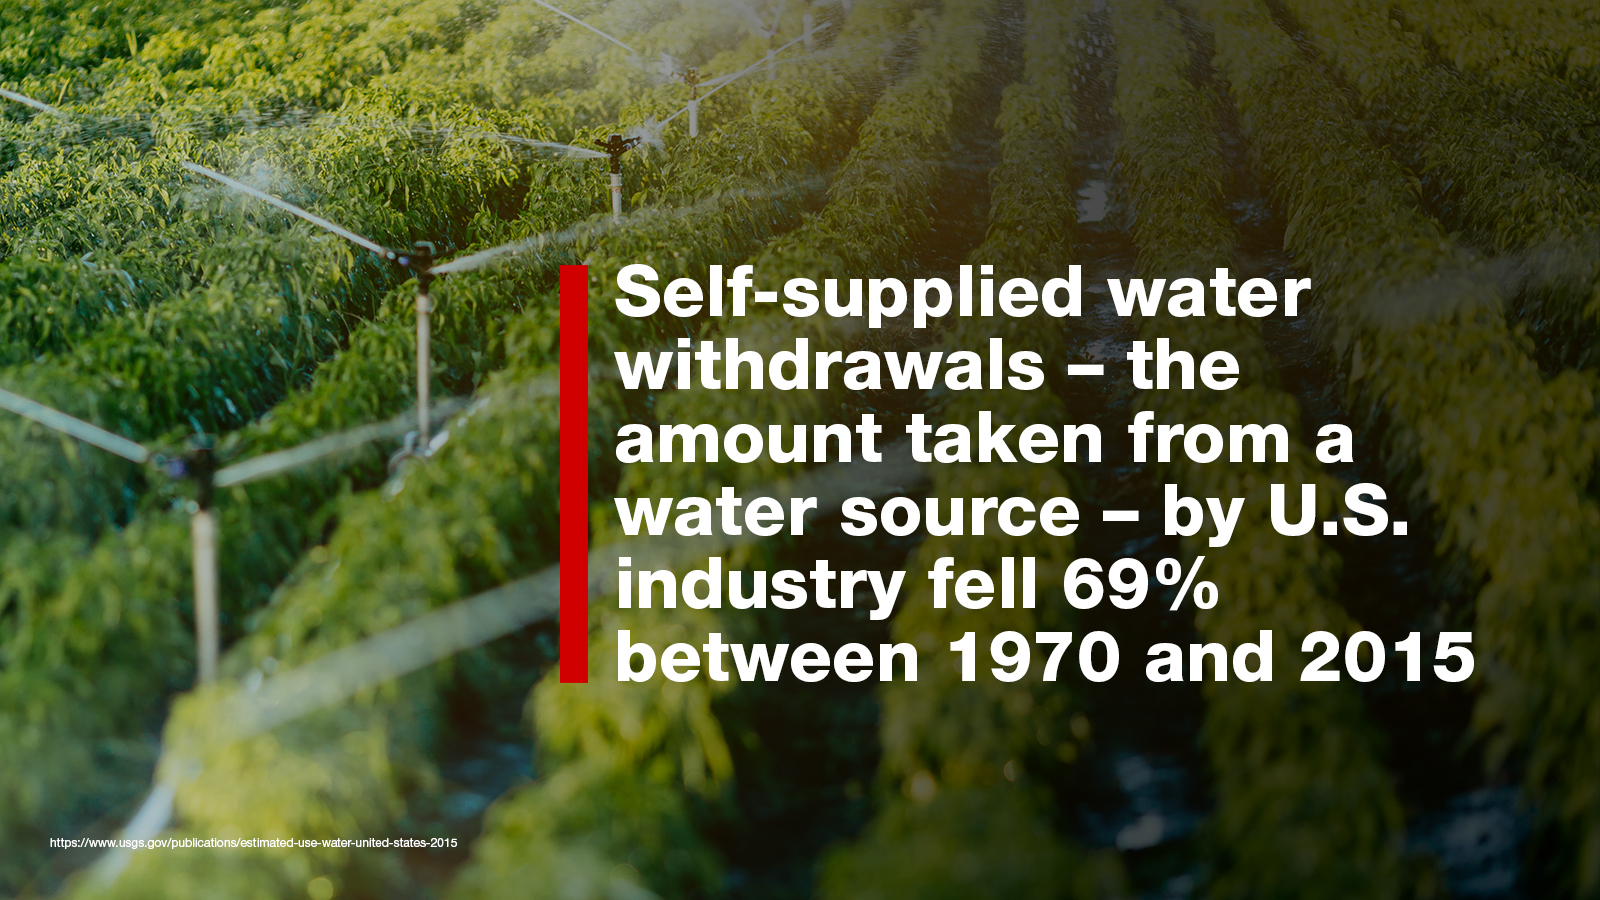 Self-supplied water withdrawals by U.S. industry decreased 69% between 1970 and 2015